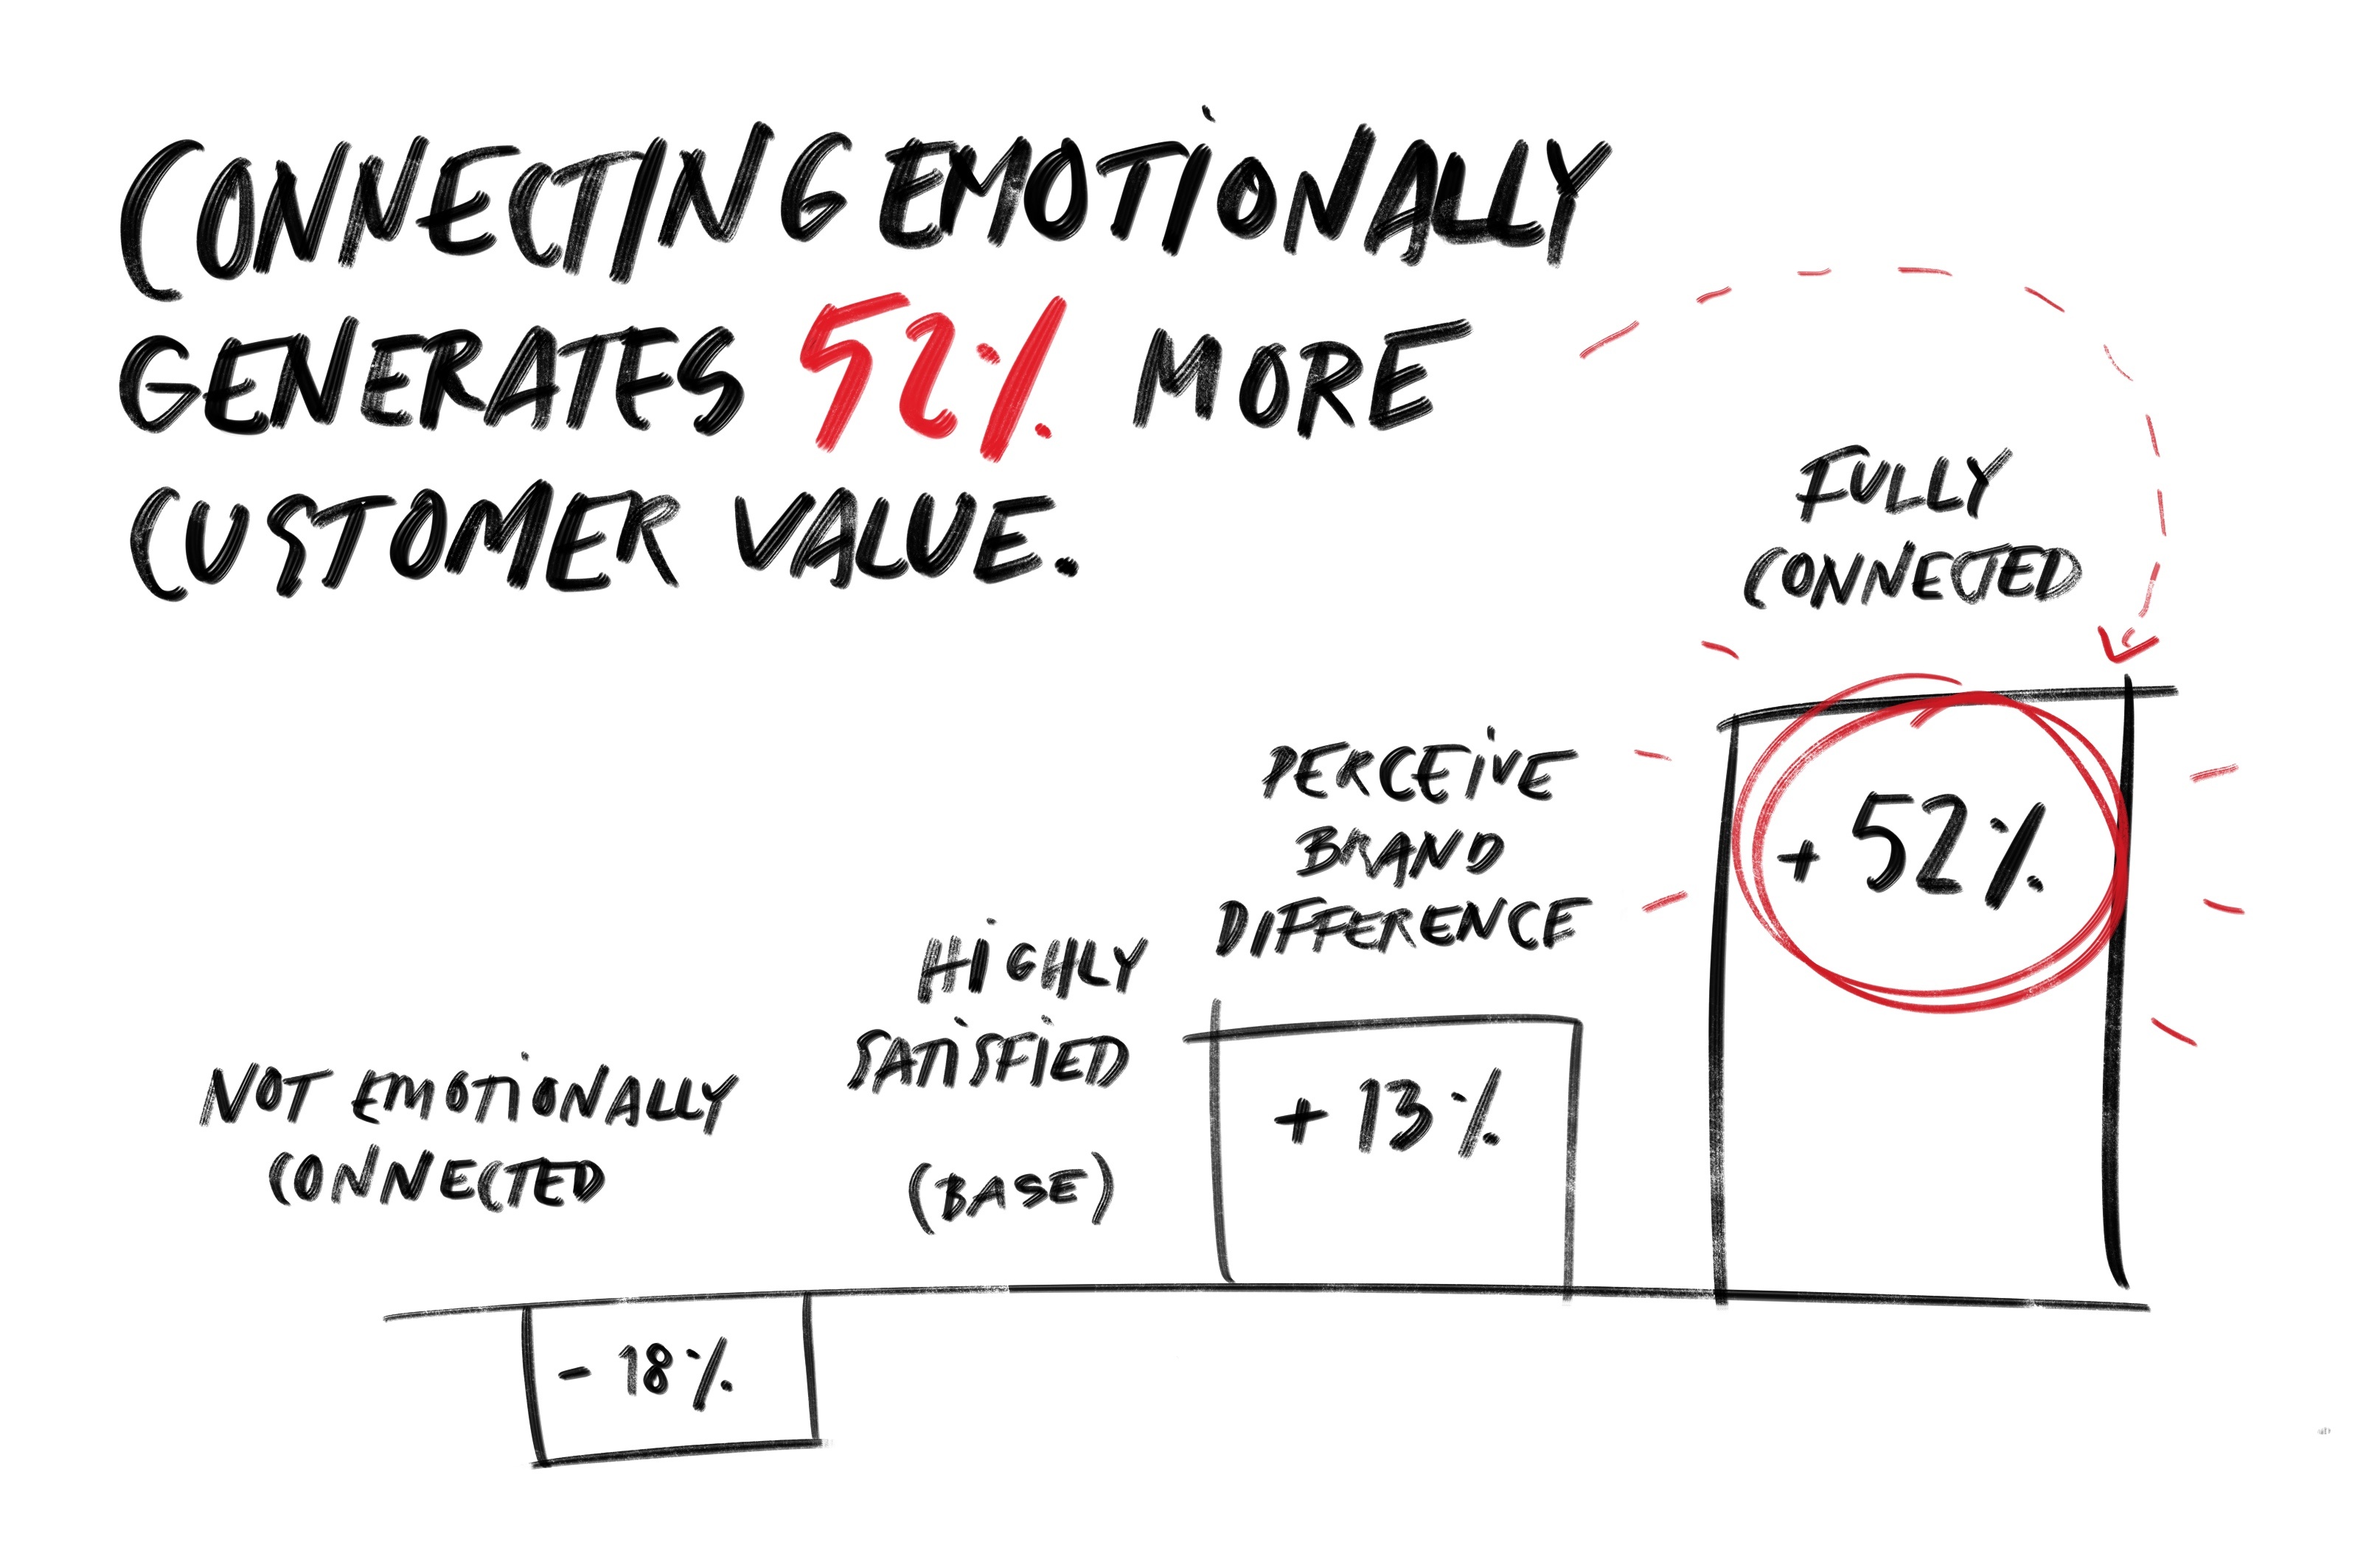 Customer Value through connecting emotionally